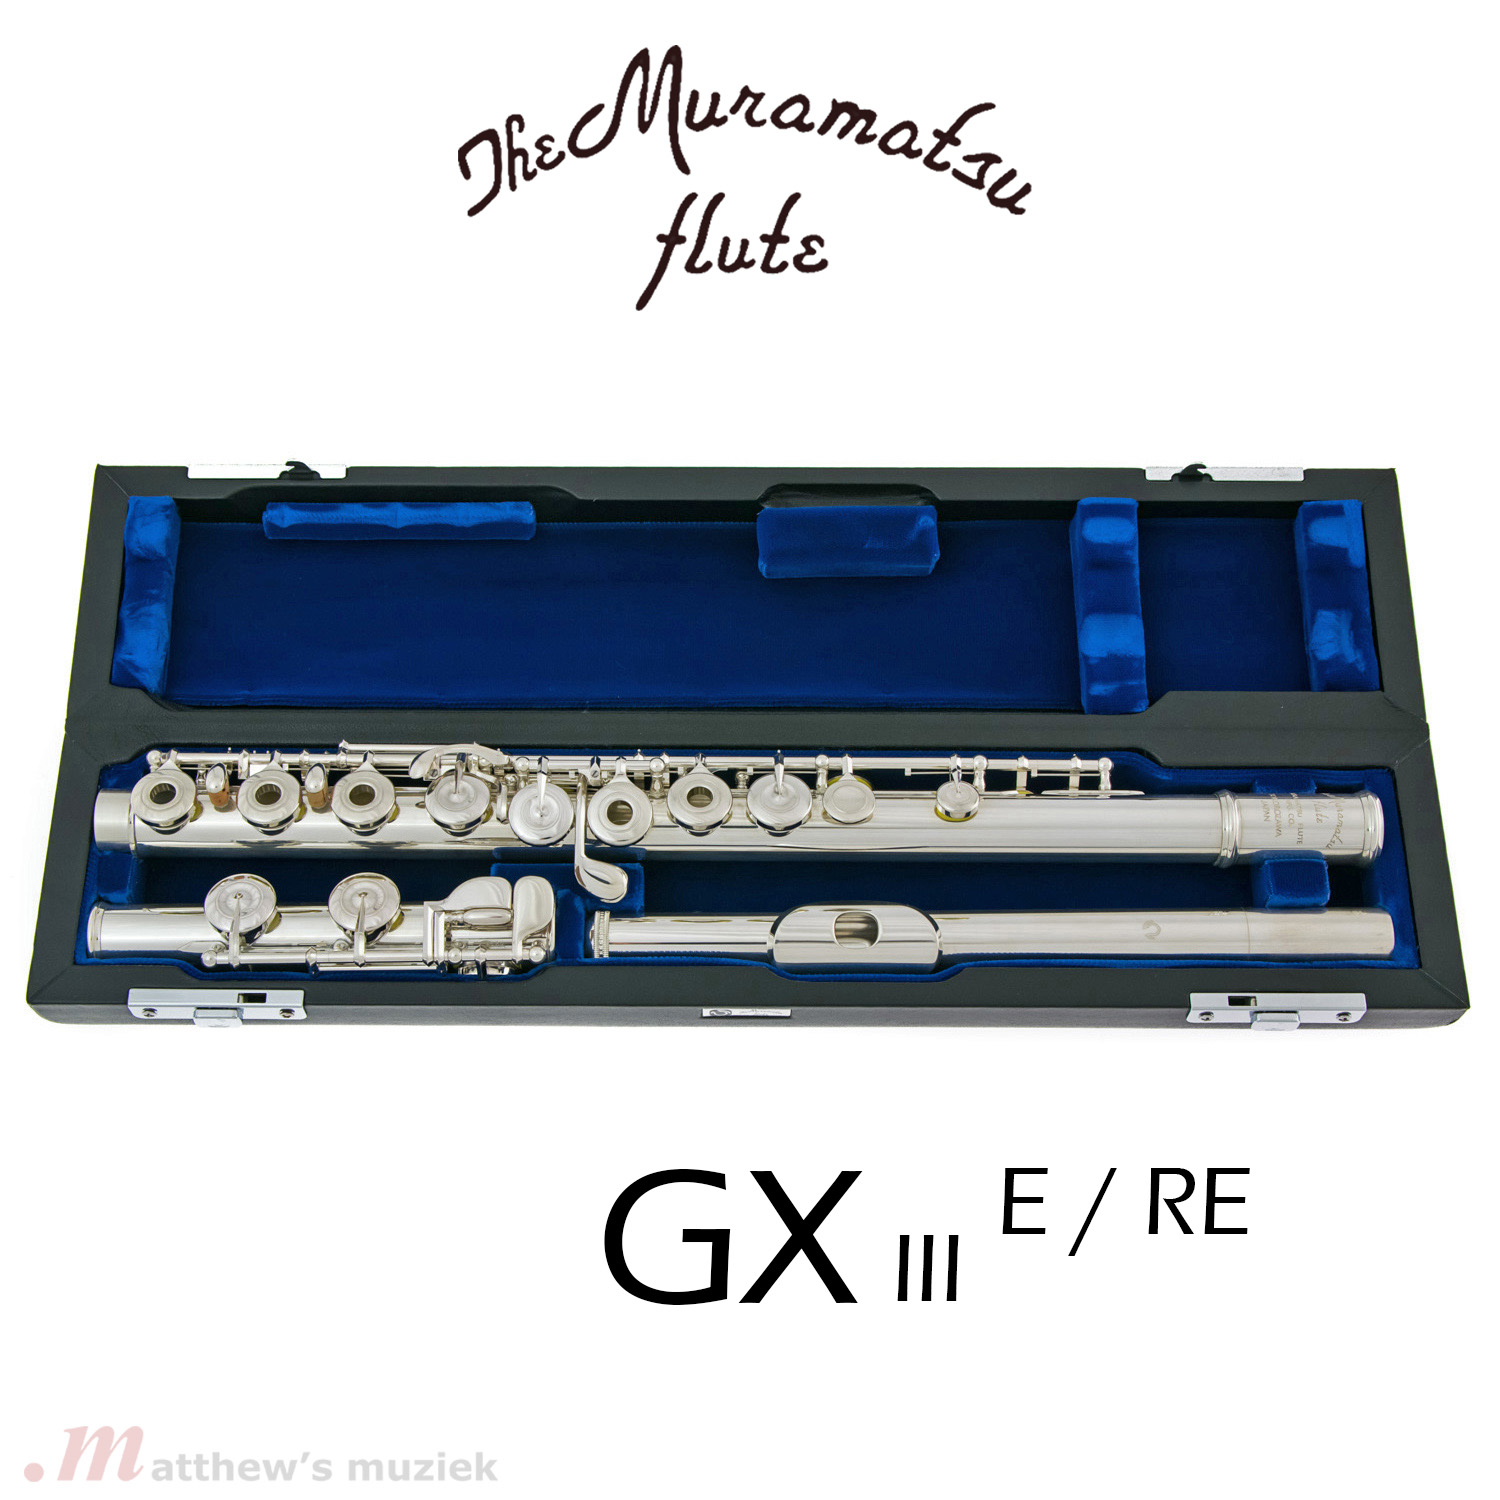 Muramatsu Dwarsfluit - GX III CE